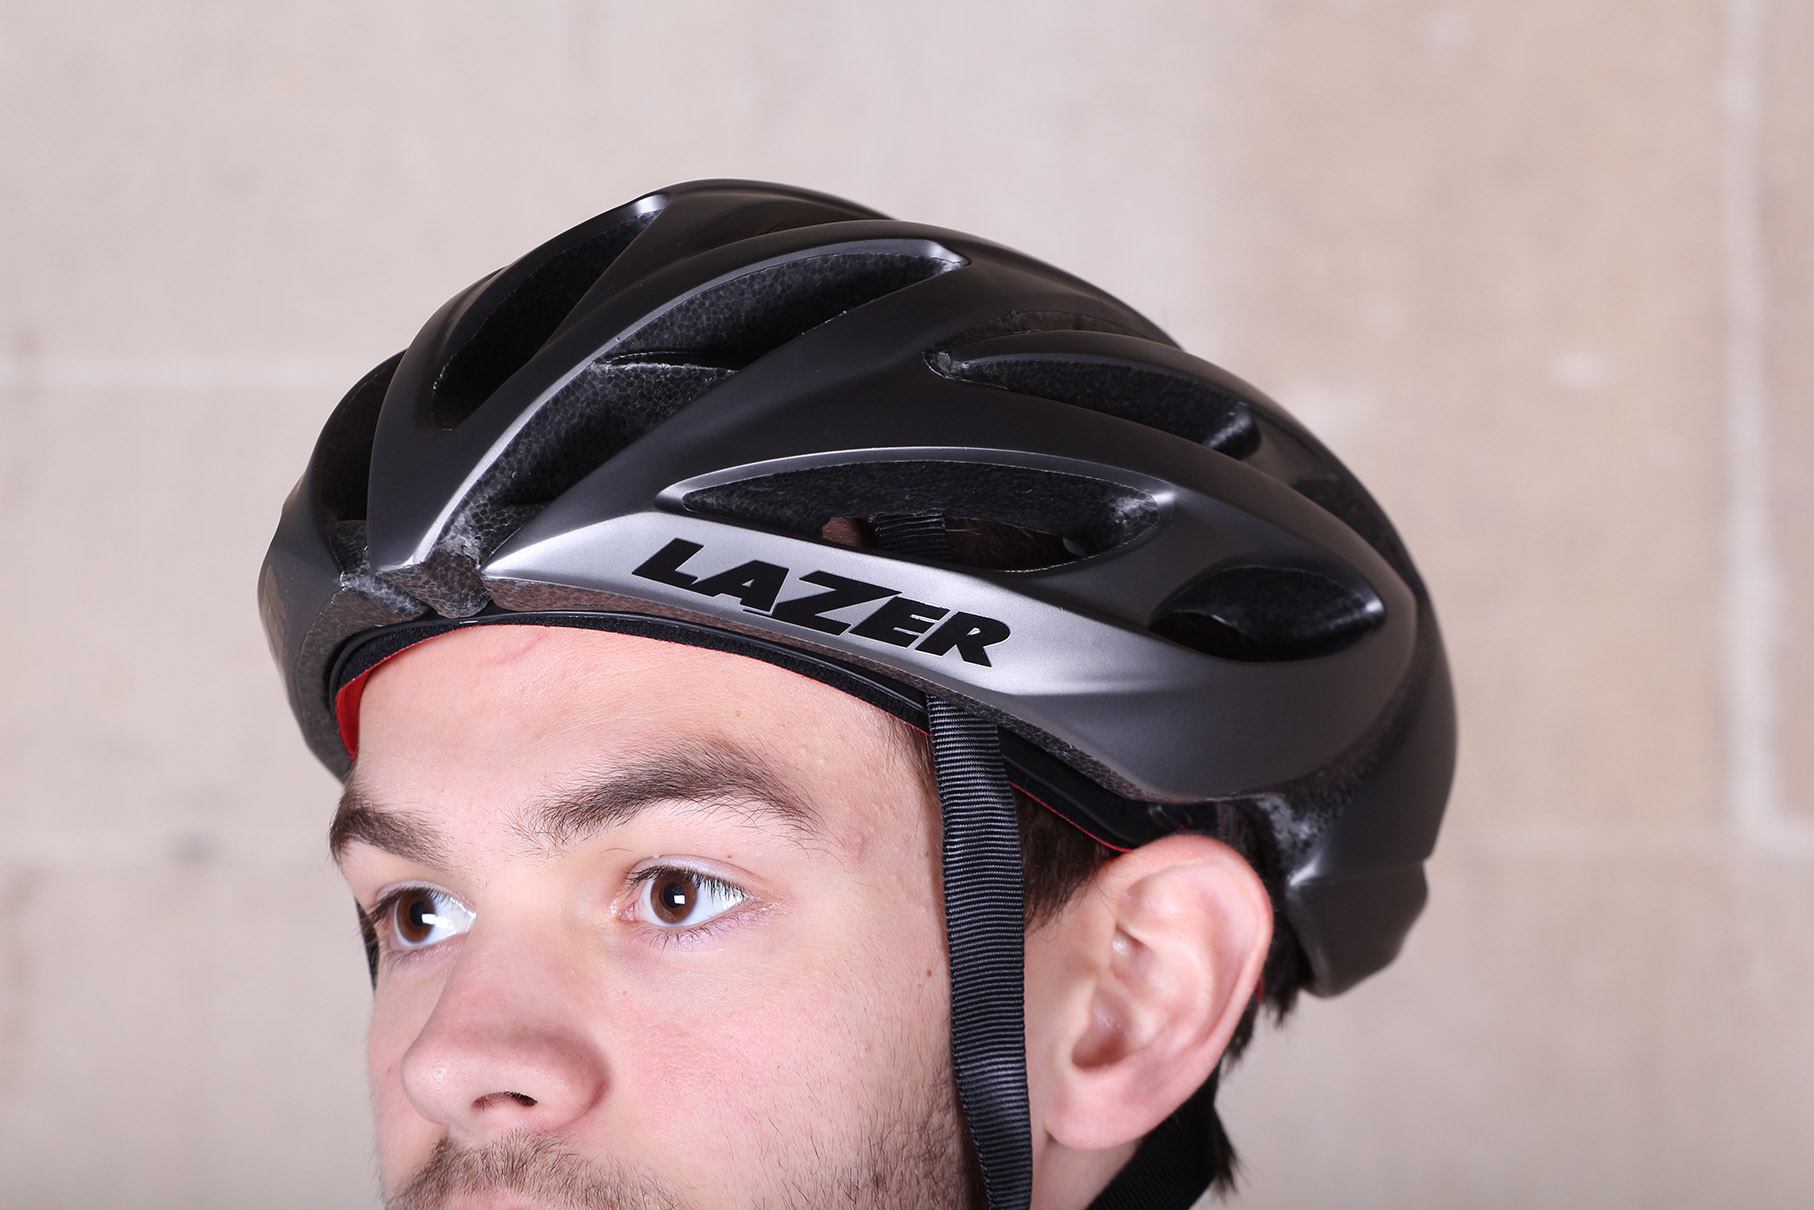 lazer o2 road helmet